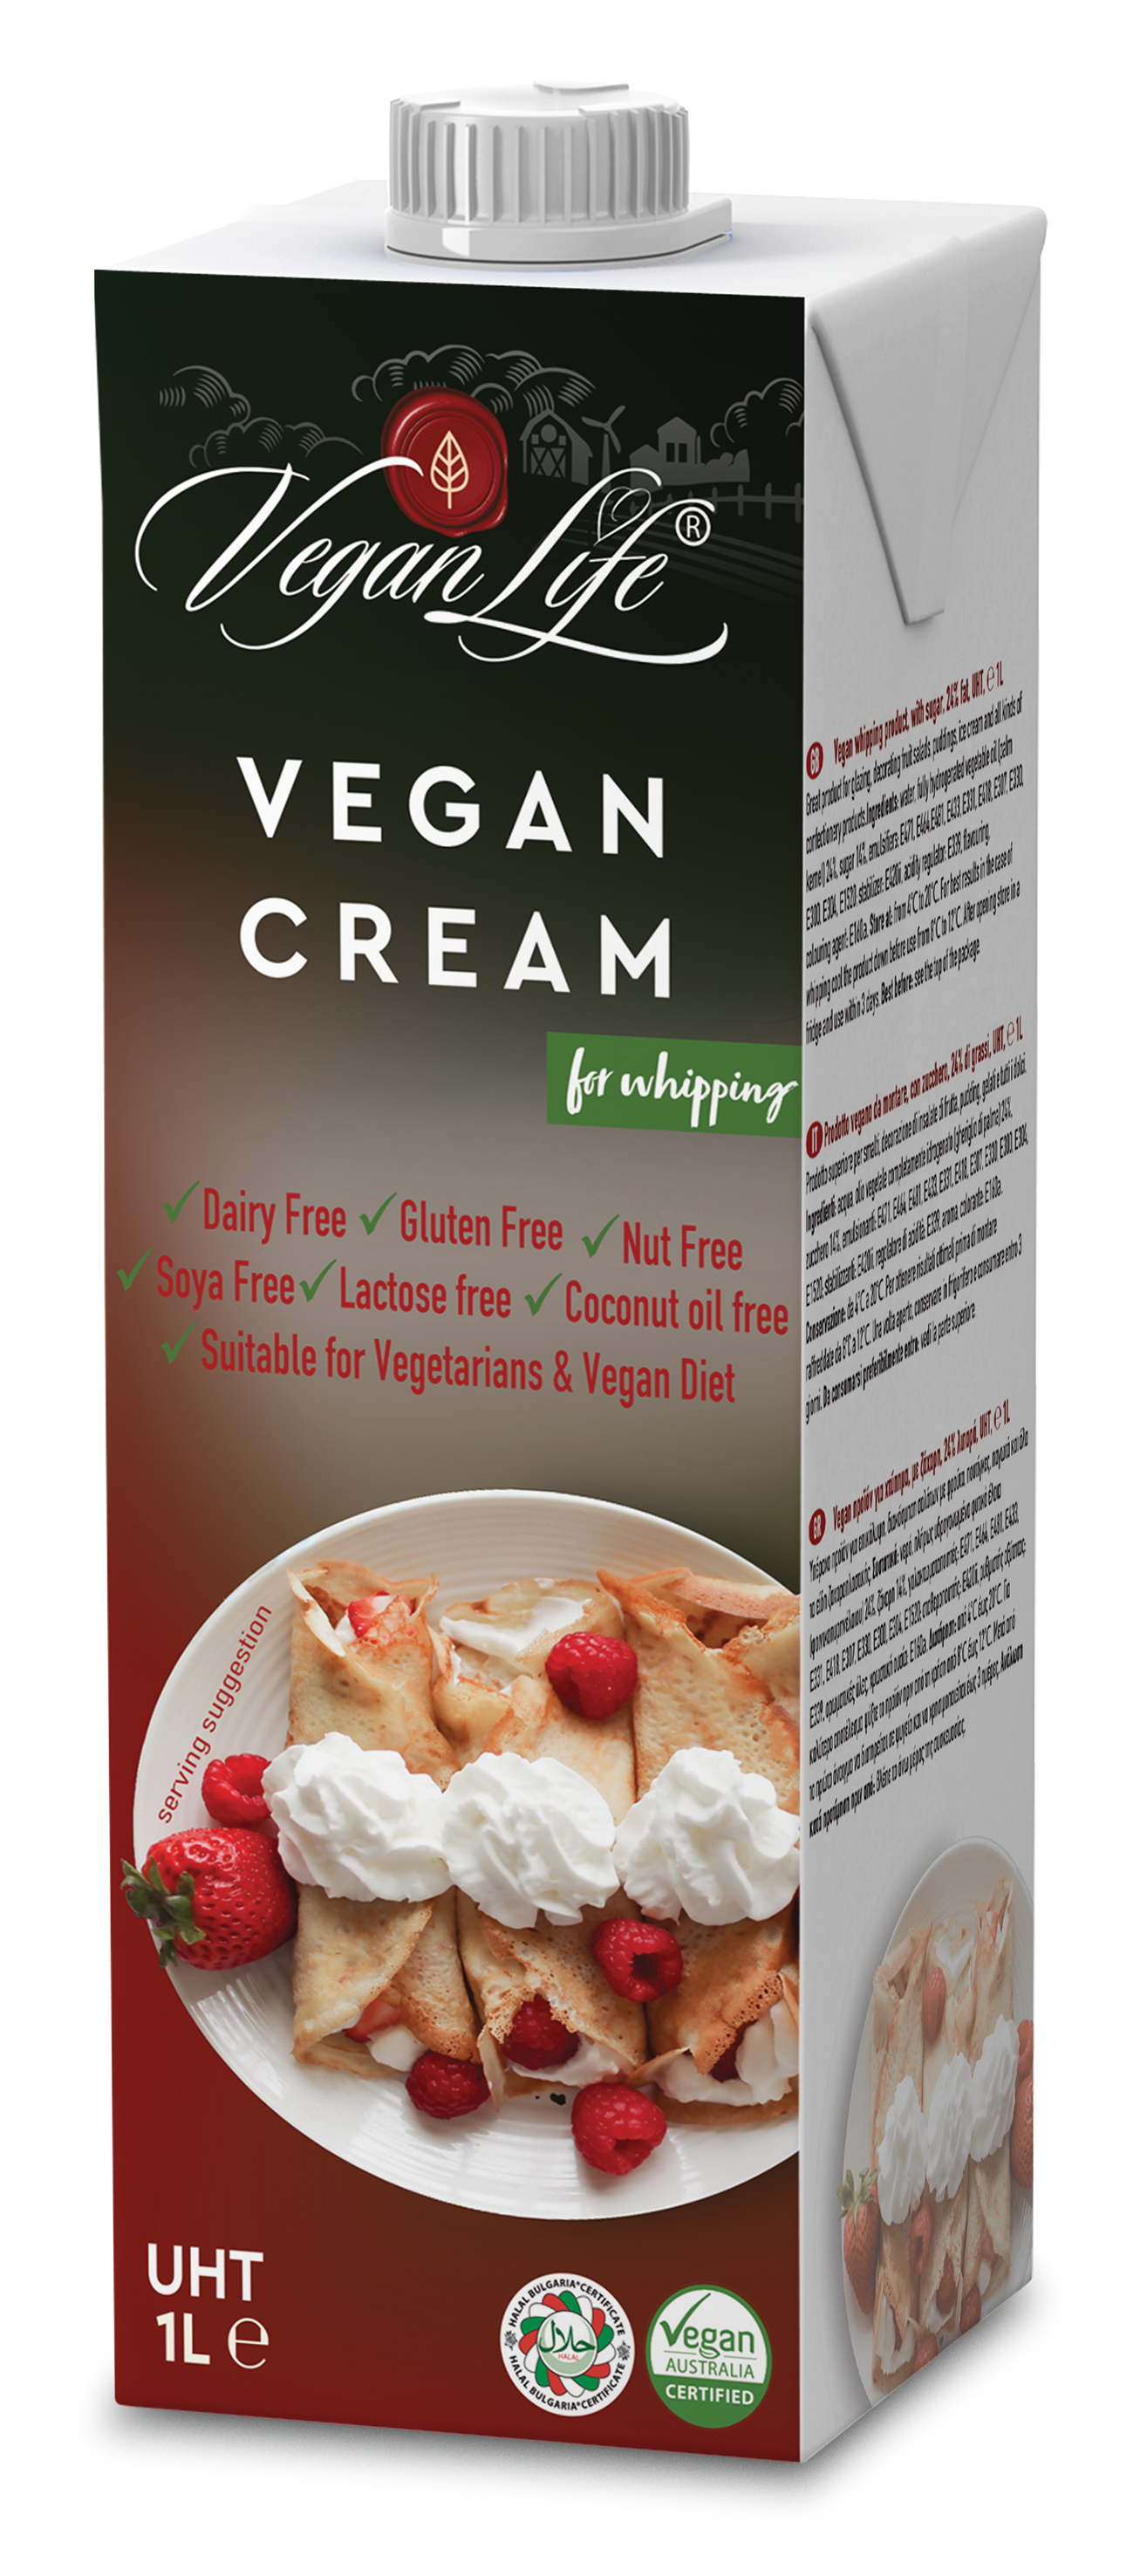 Vegan Life Whipping Vegan Cream